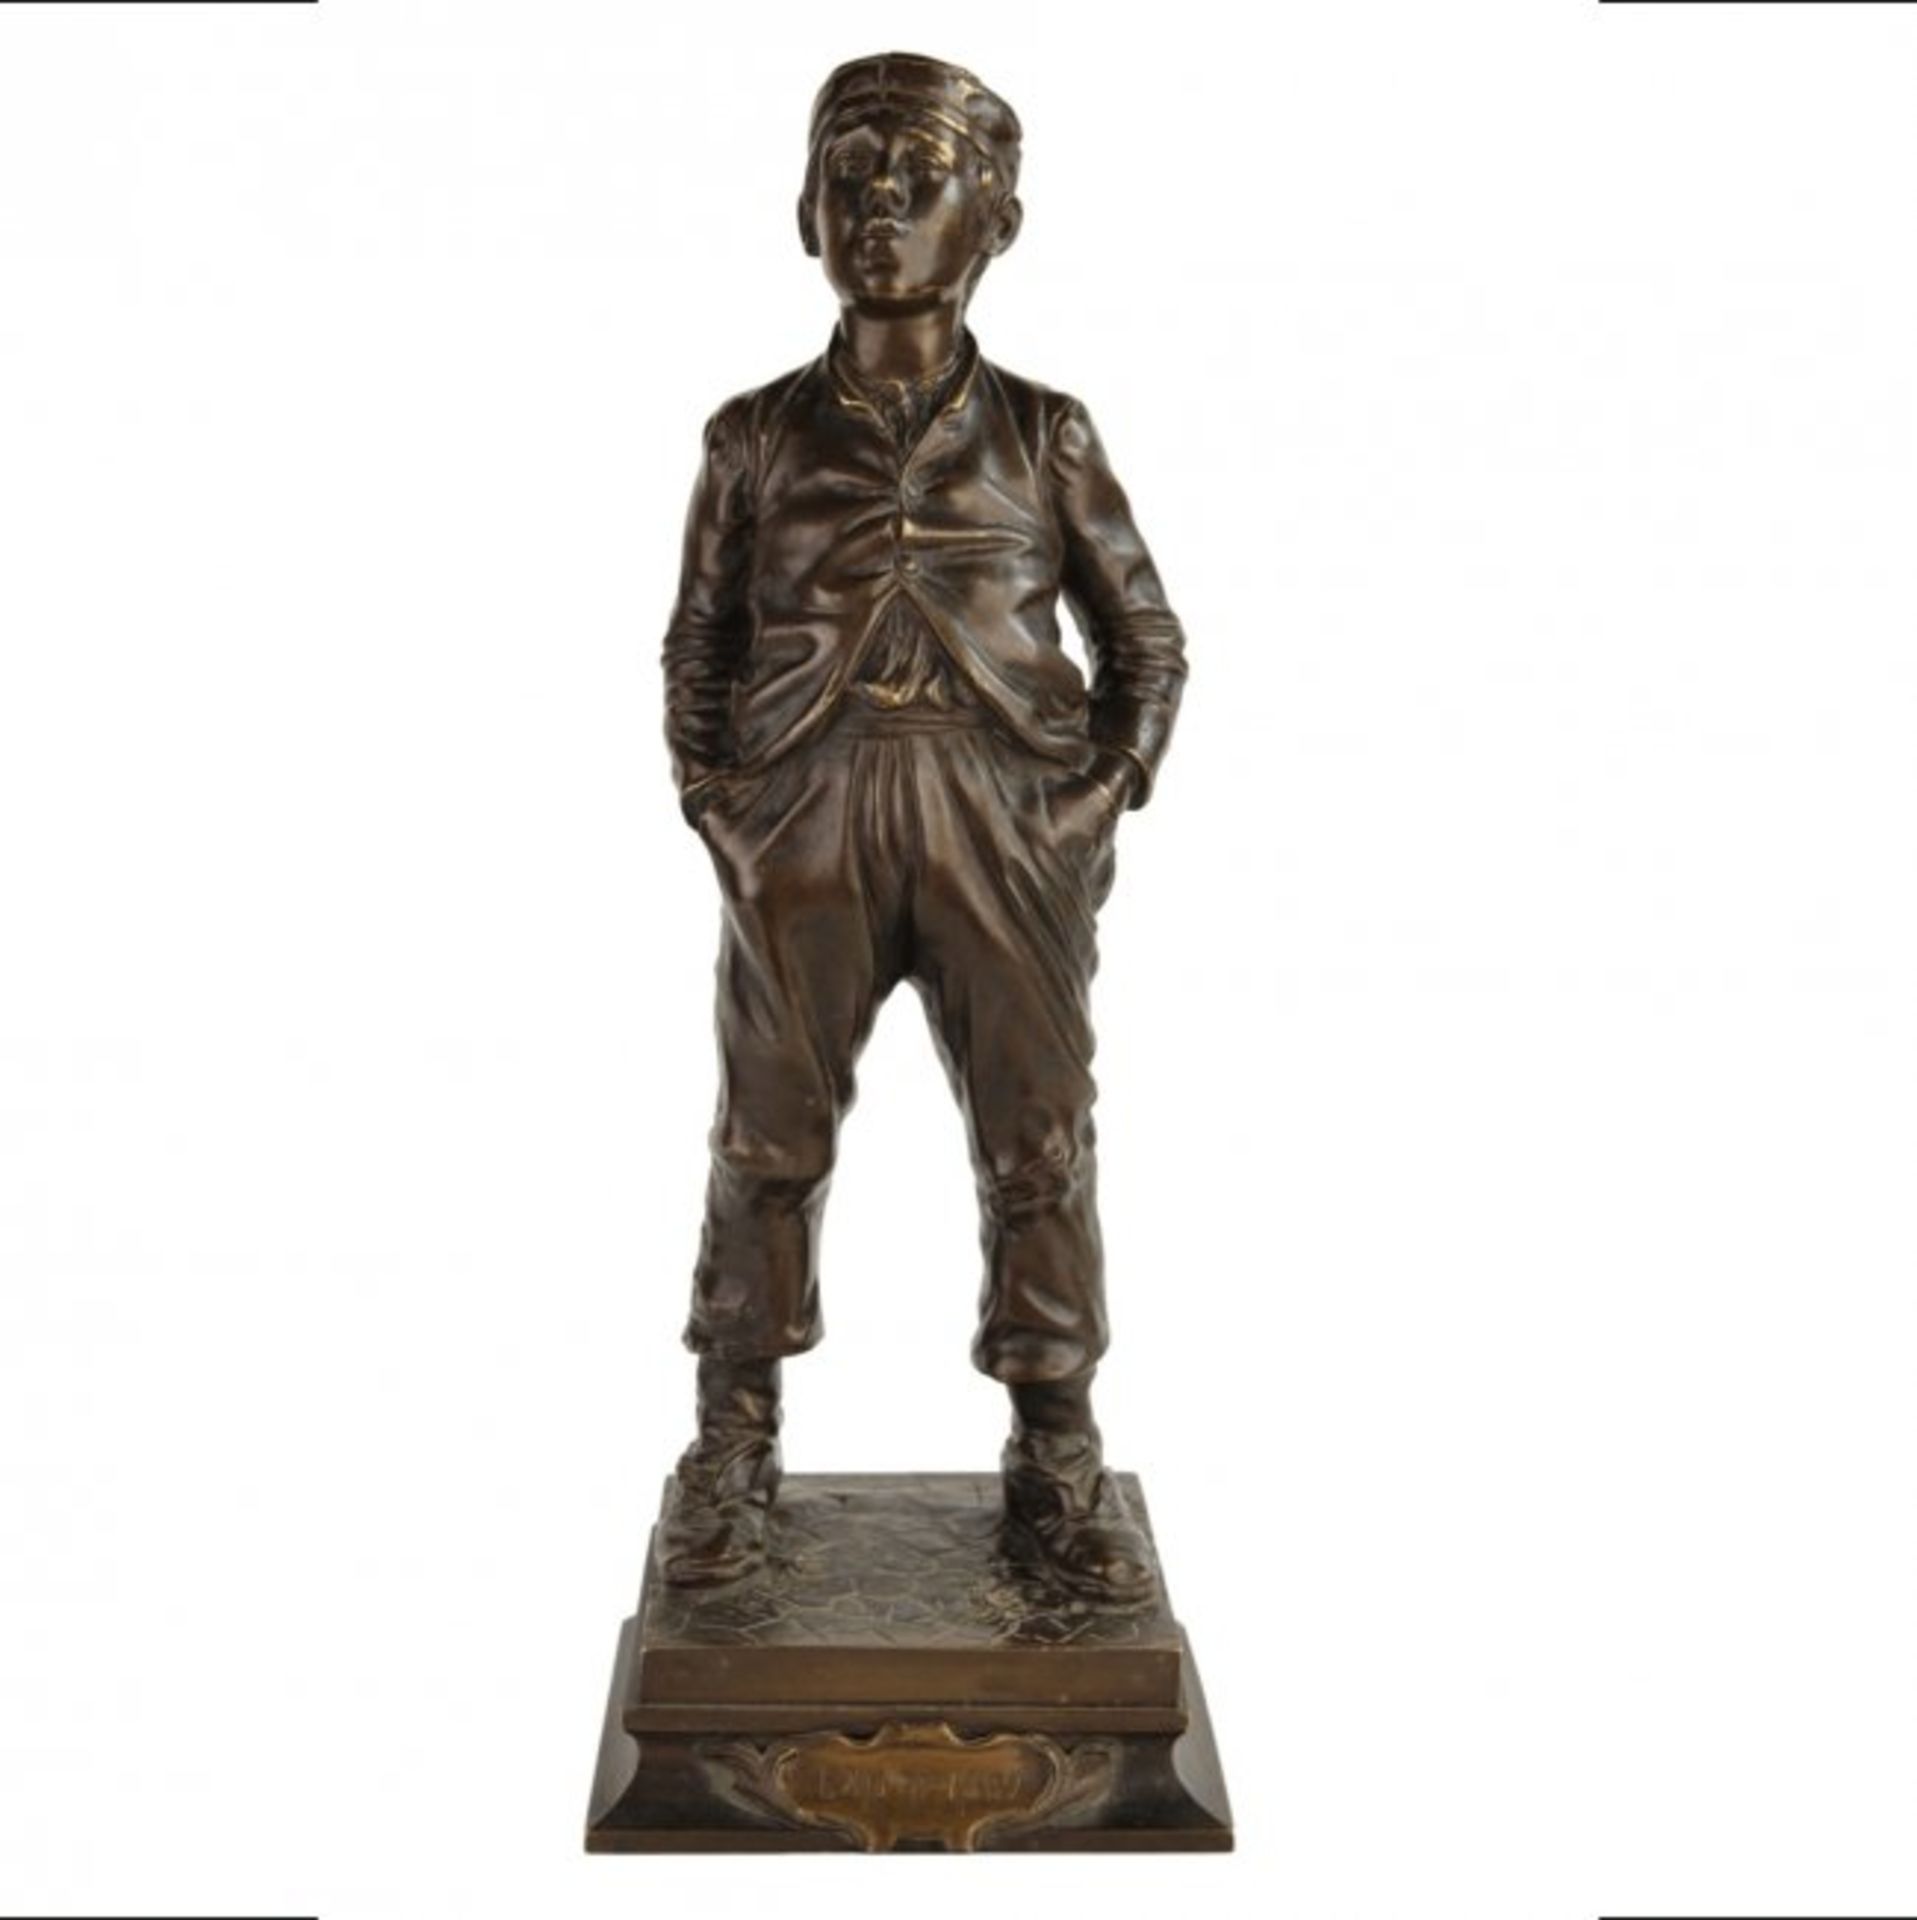 Antique H. Herzberg bronze sculpture “Whistle”